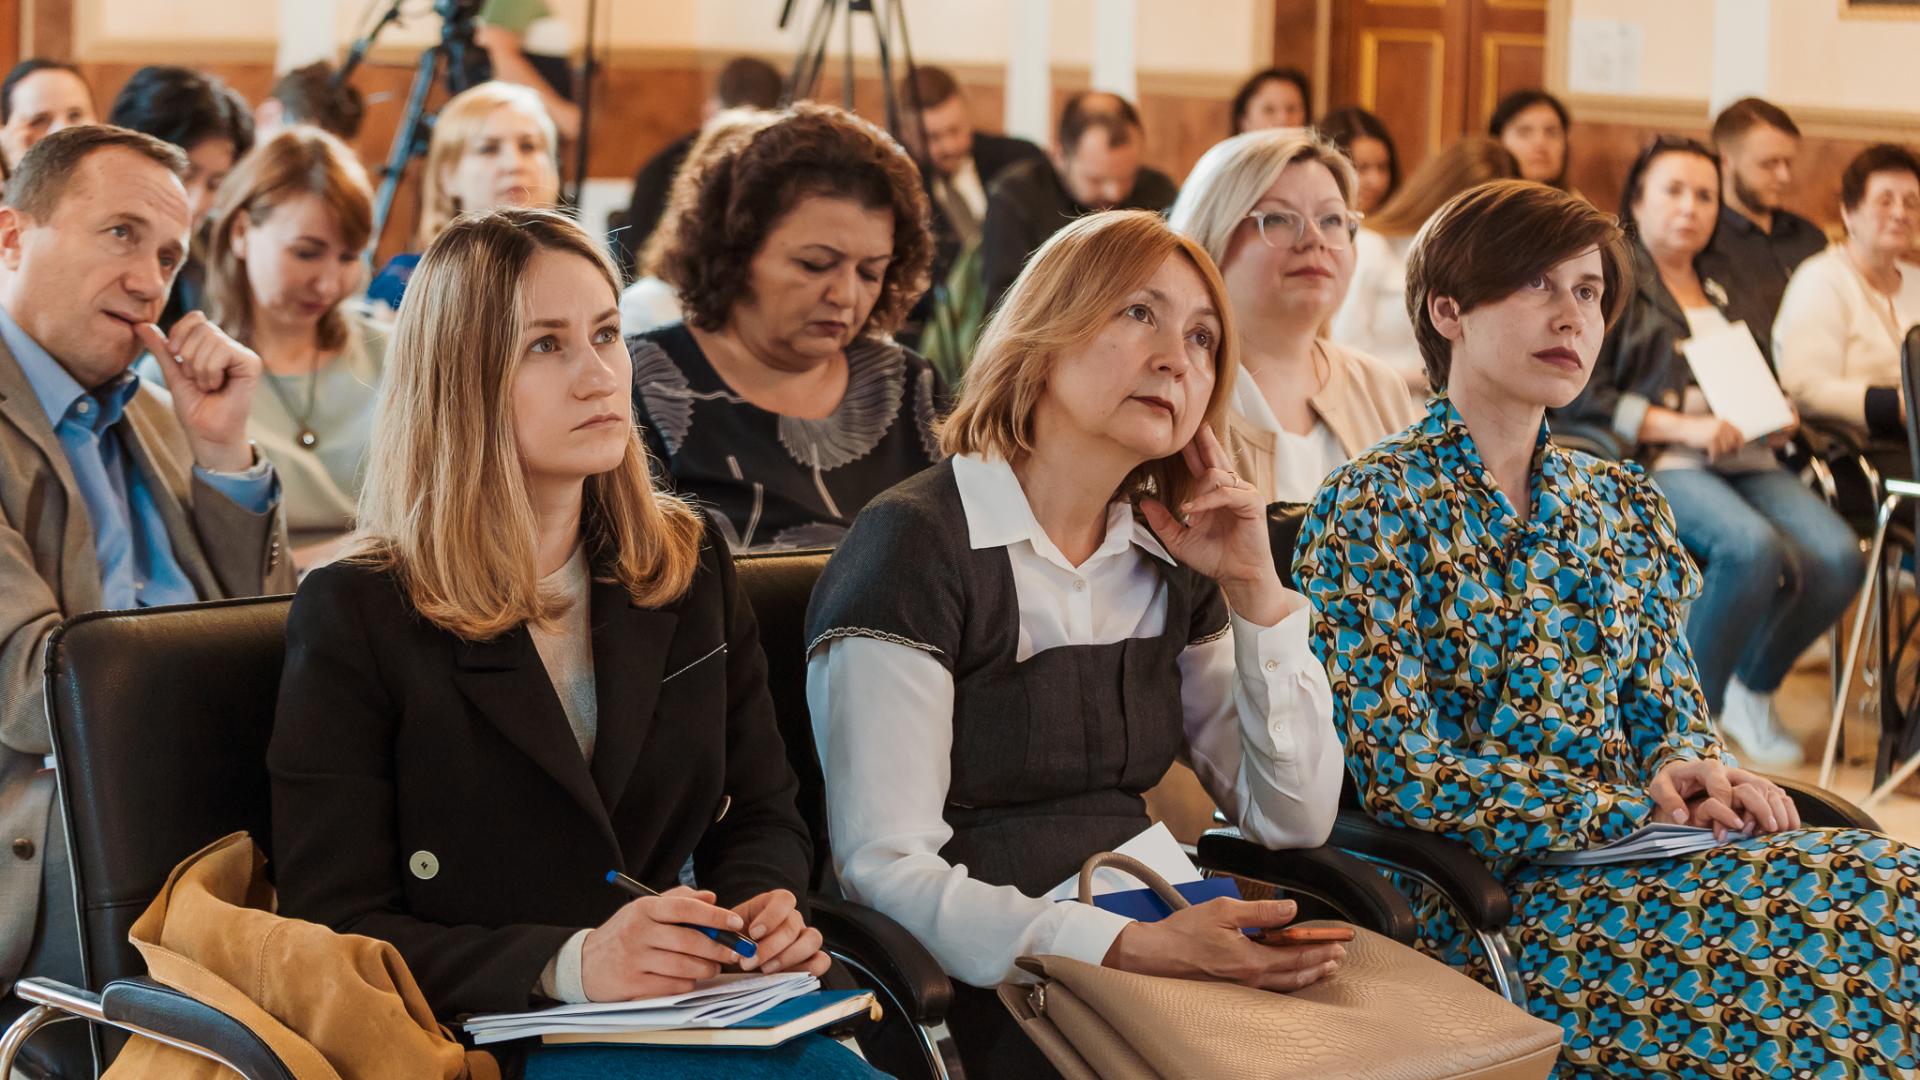 Photograph of audience at Verkhova Radna event